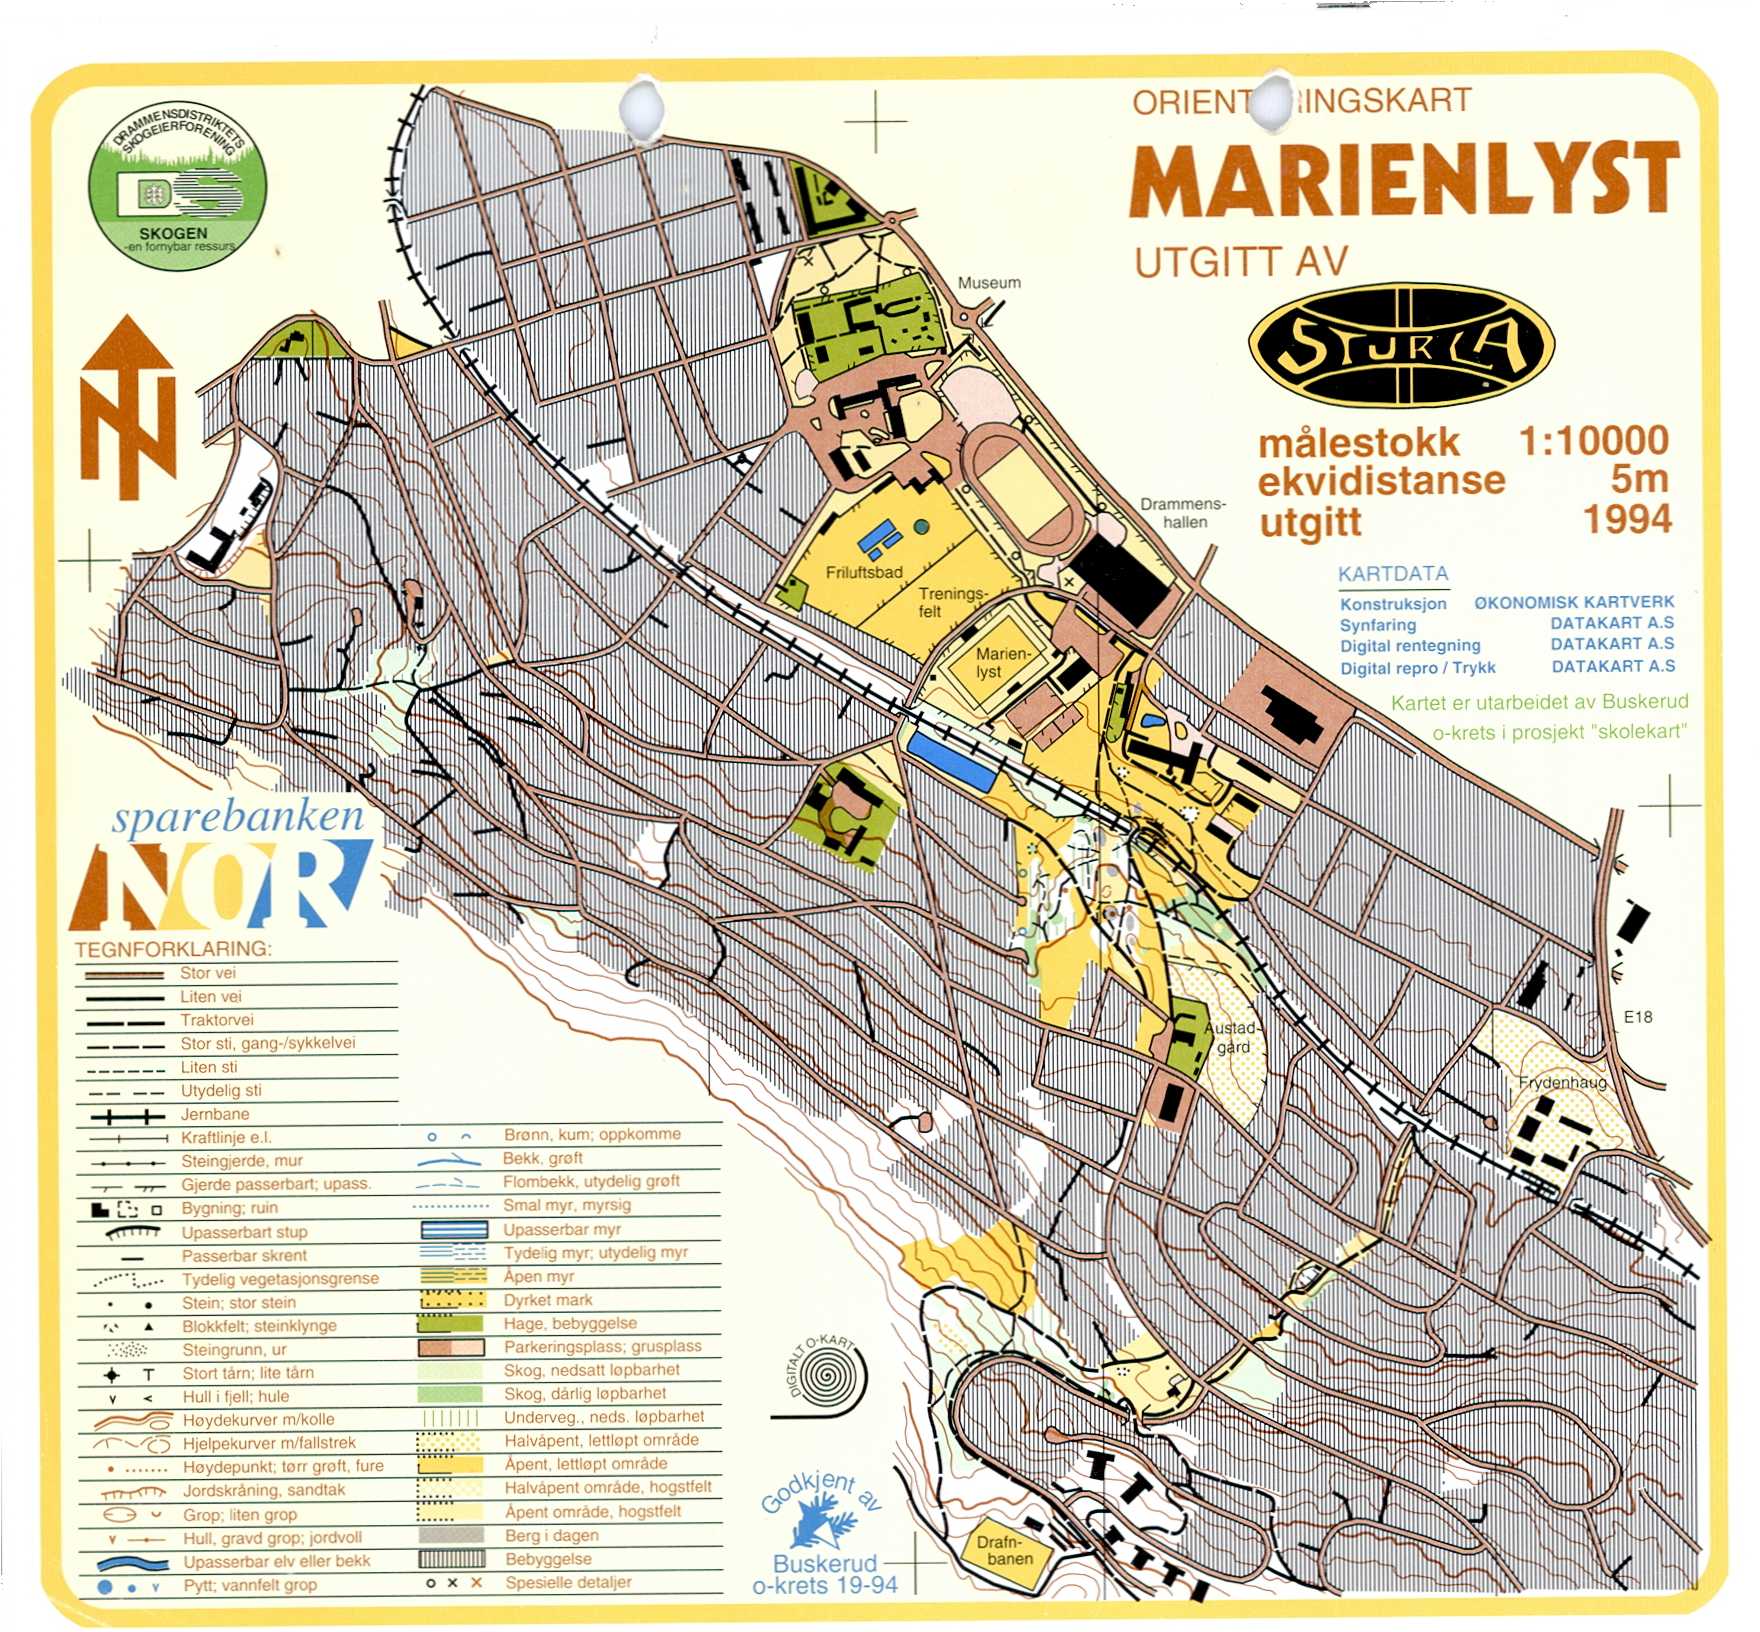 Marienlyst (01-06-1994)